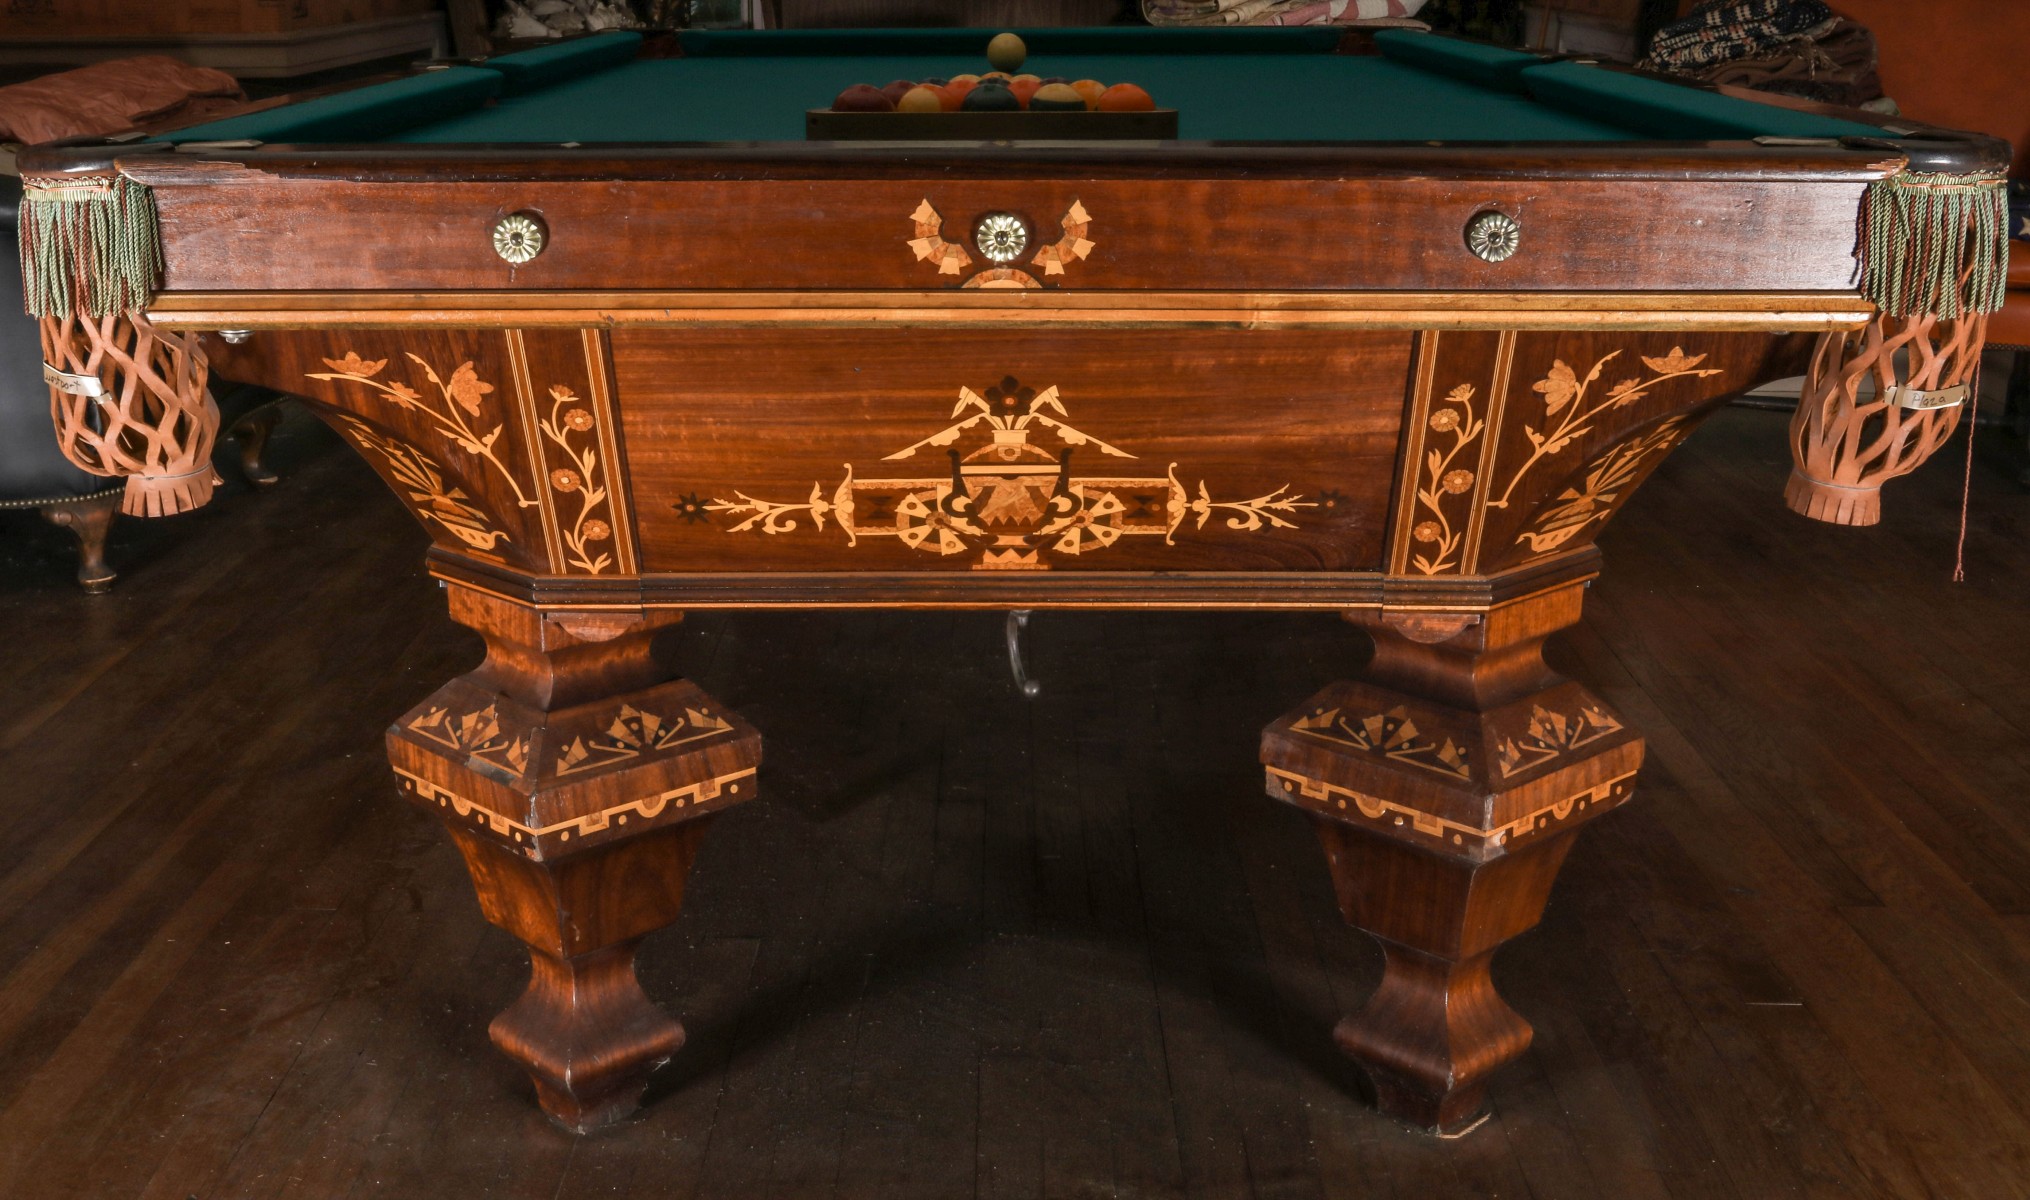 1880s BRUNSWICK 'THE BRILLIANT NOVELTY' POOL TABLE